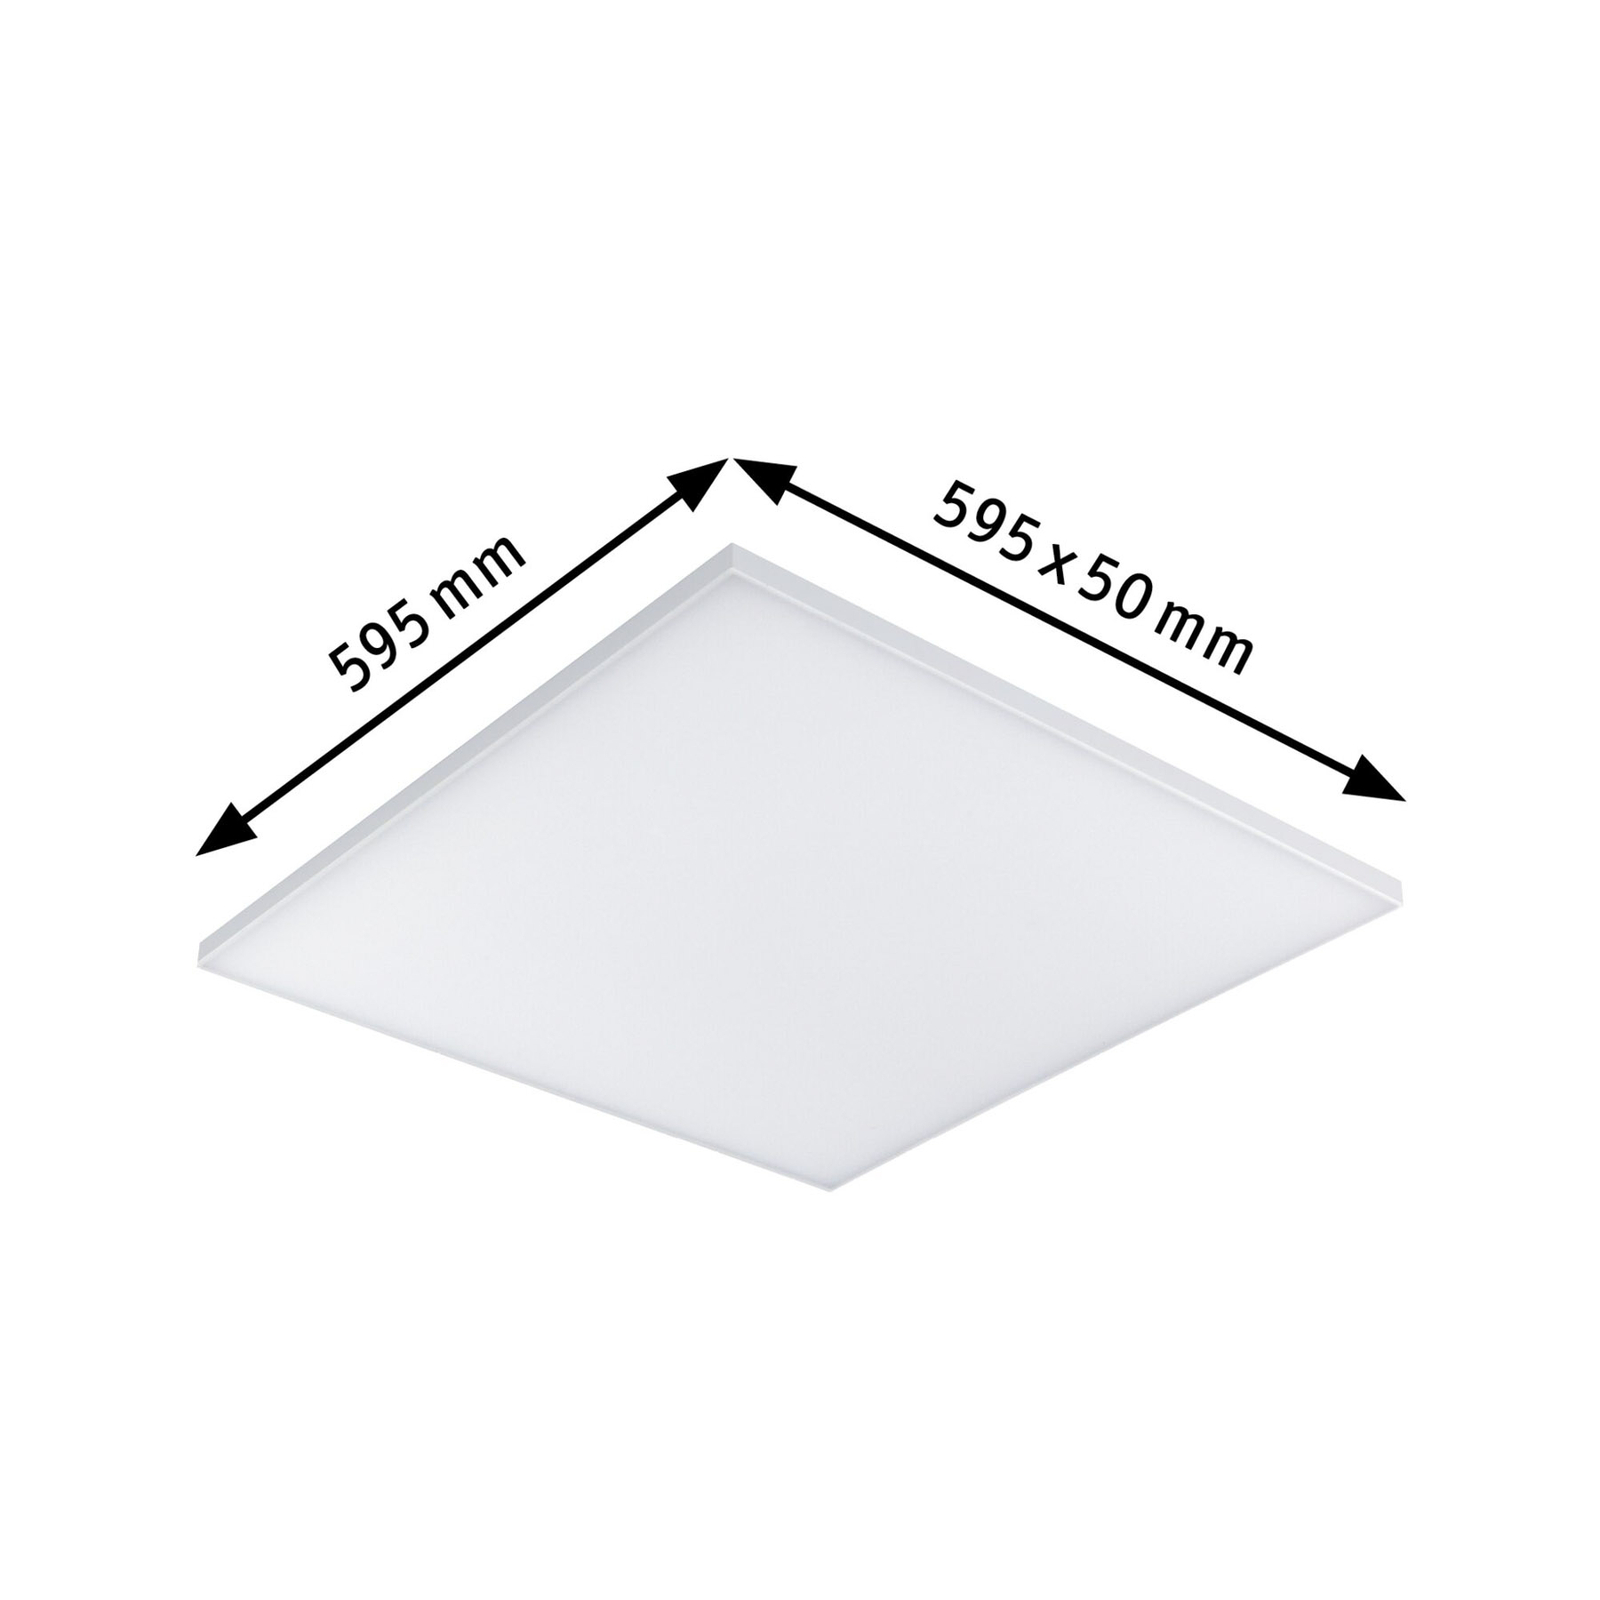 Paulmann Velora panou LED dim 3trepte, 59,5x59,5cm